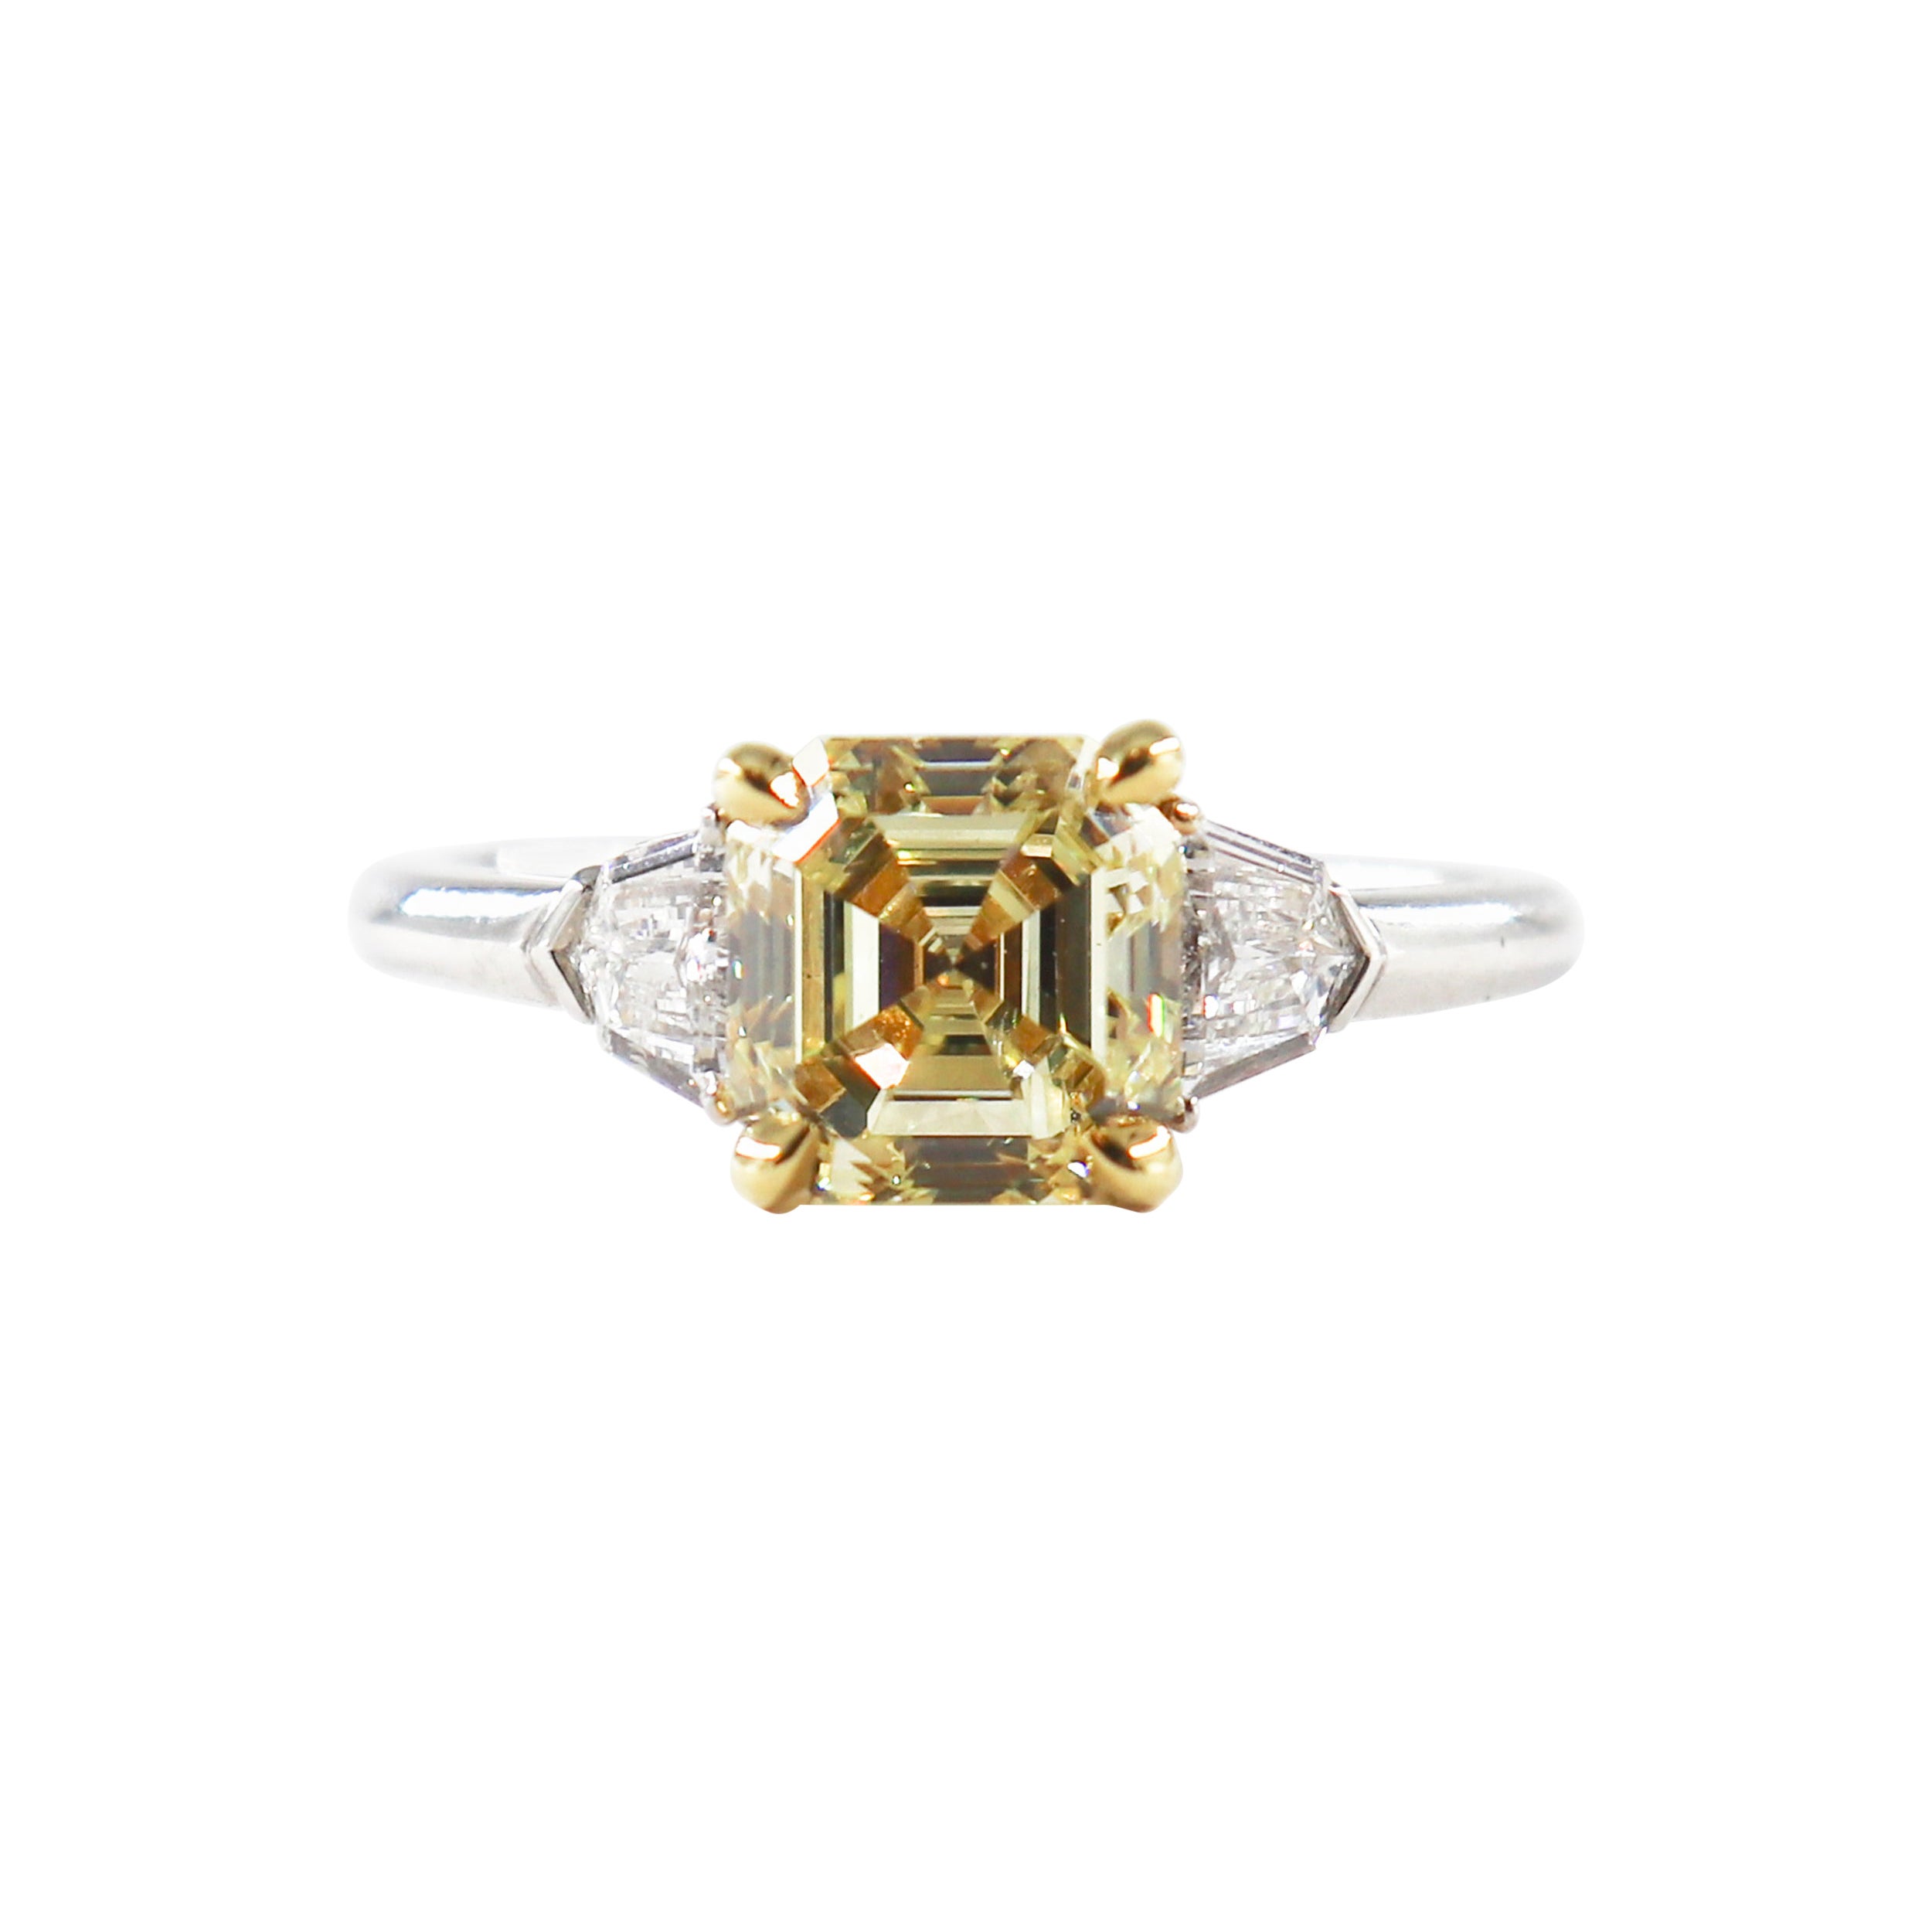 J. Birnbach GIA Certified 1.94 carat Fancy Yellow Asscher Cut Diamond Ring For Sale